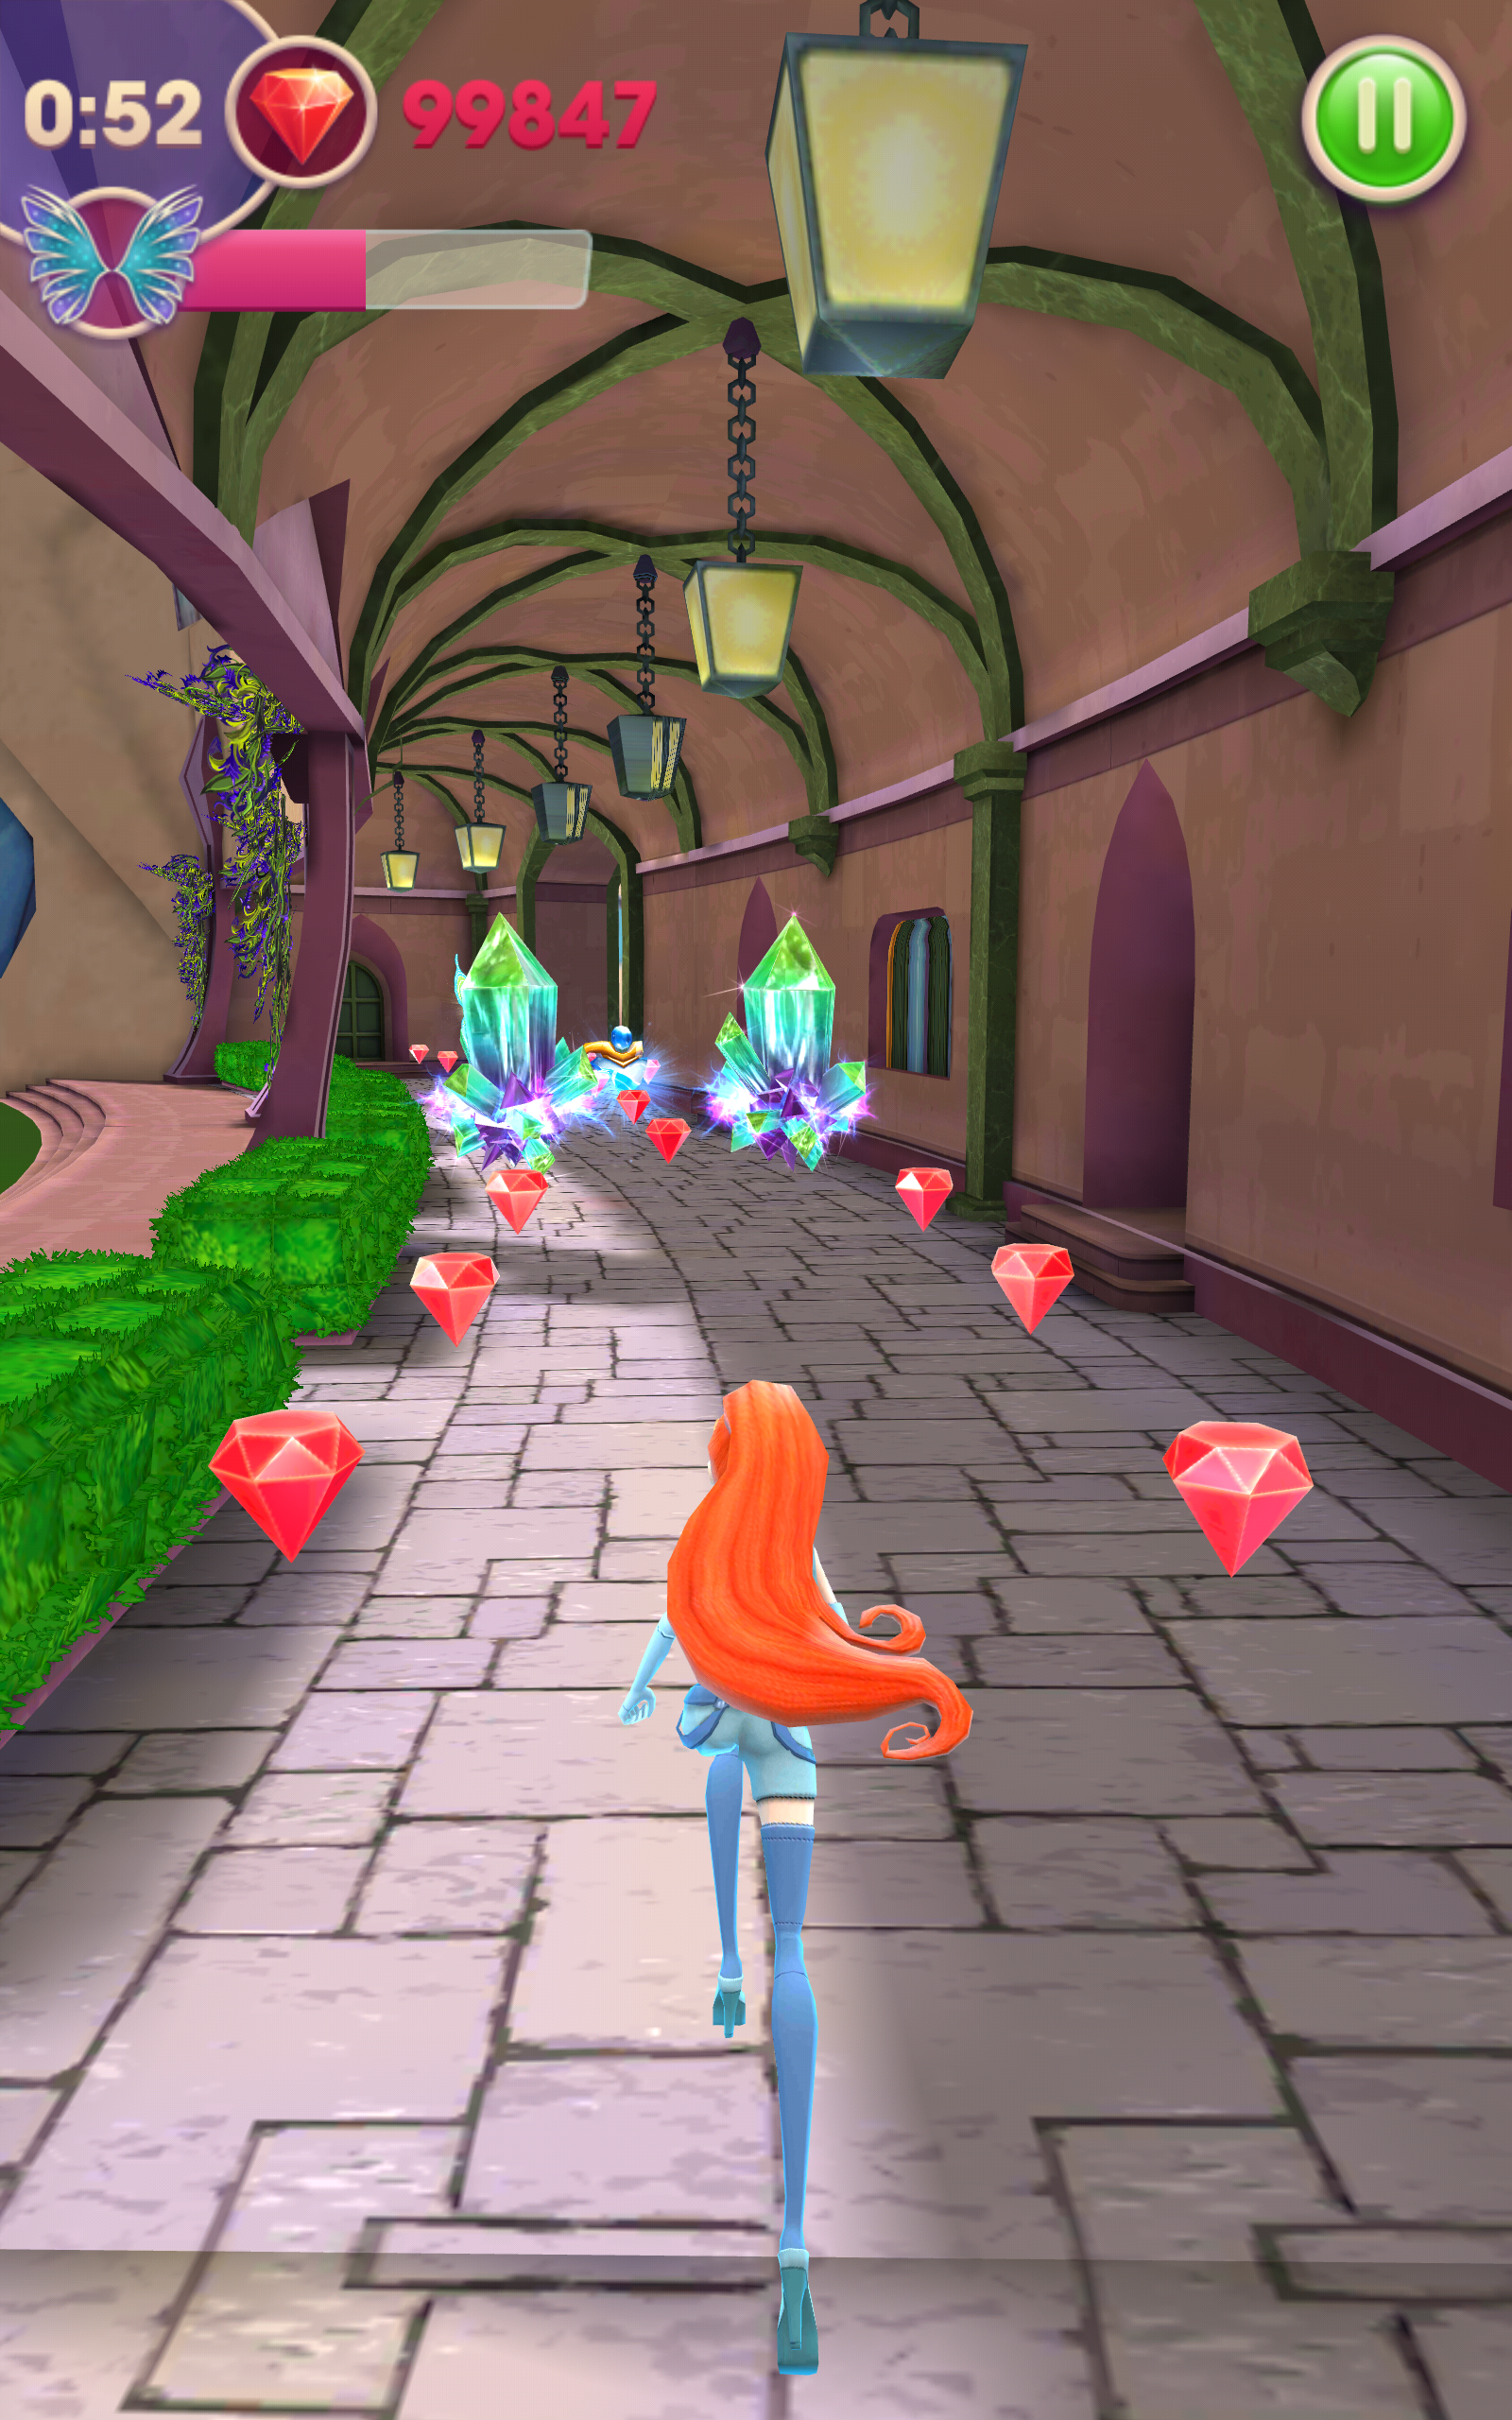 Бесплатная игра на телефон бродилки. Игра Винкс приключения Блум. Компьютерная игра Винкс 2. Игра Winx Bloomix Quest. Игра Винкс 2006 года.